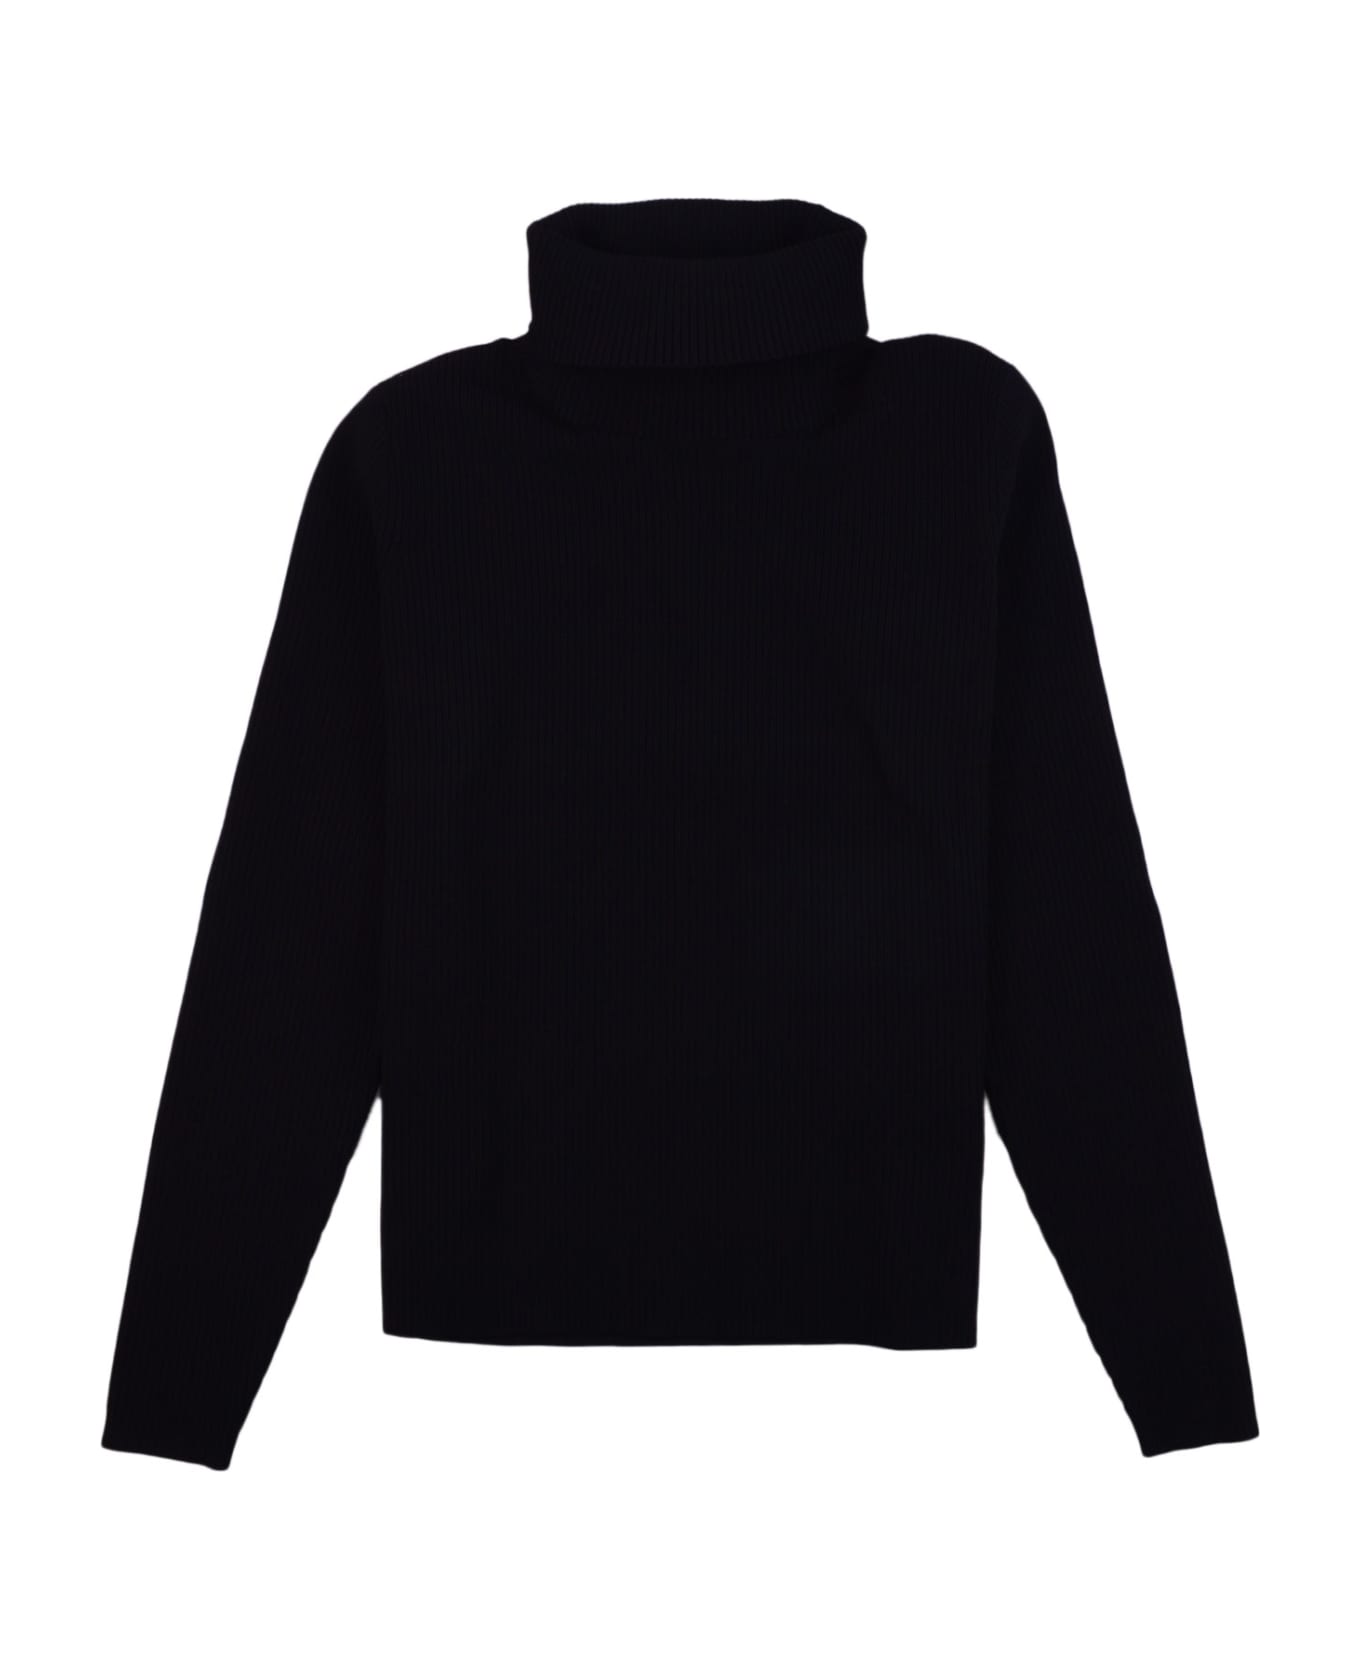 RRD - Roberto Ricci Design Sweater - Nero ニットウェア